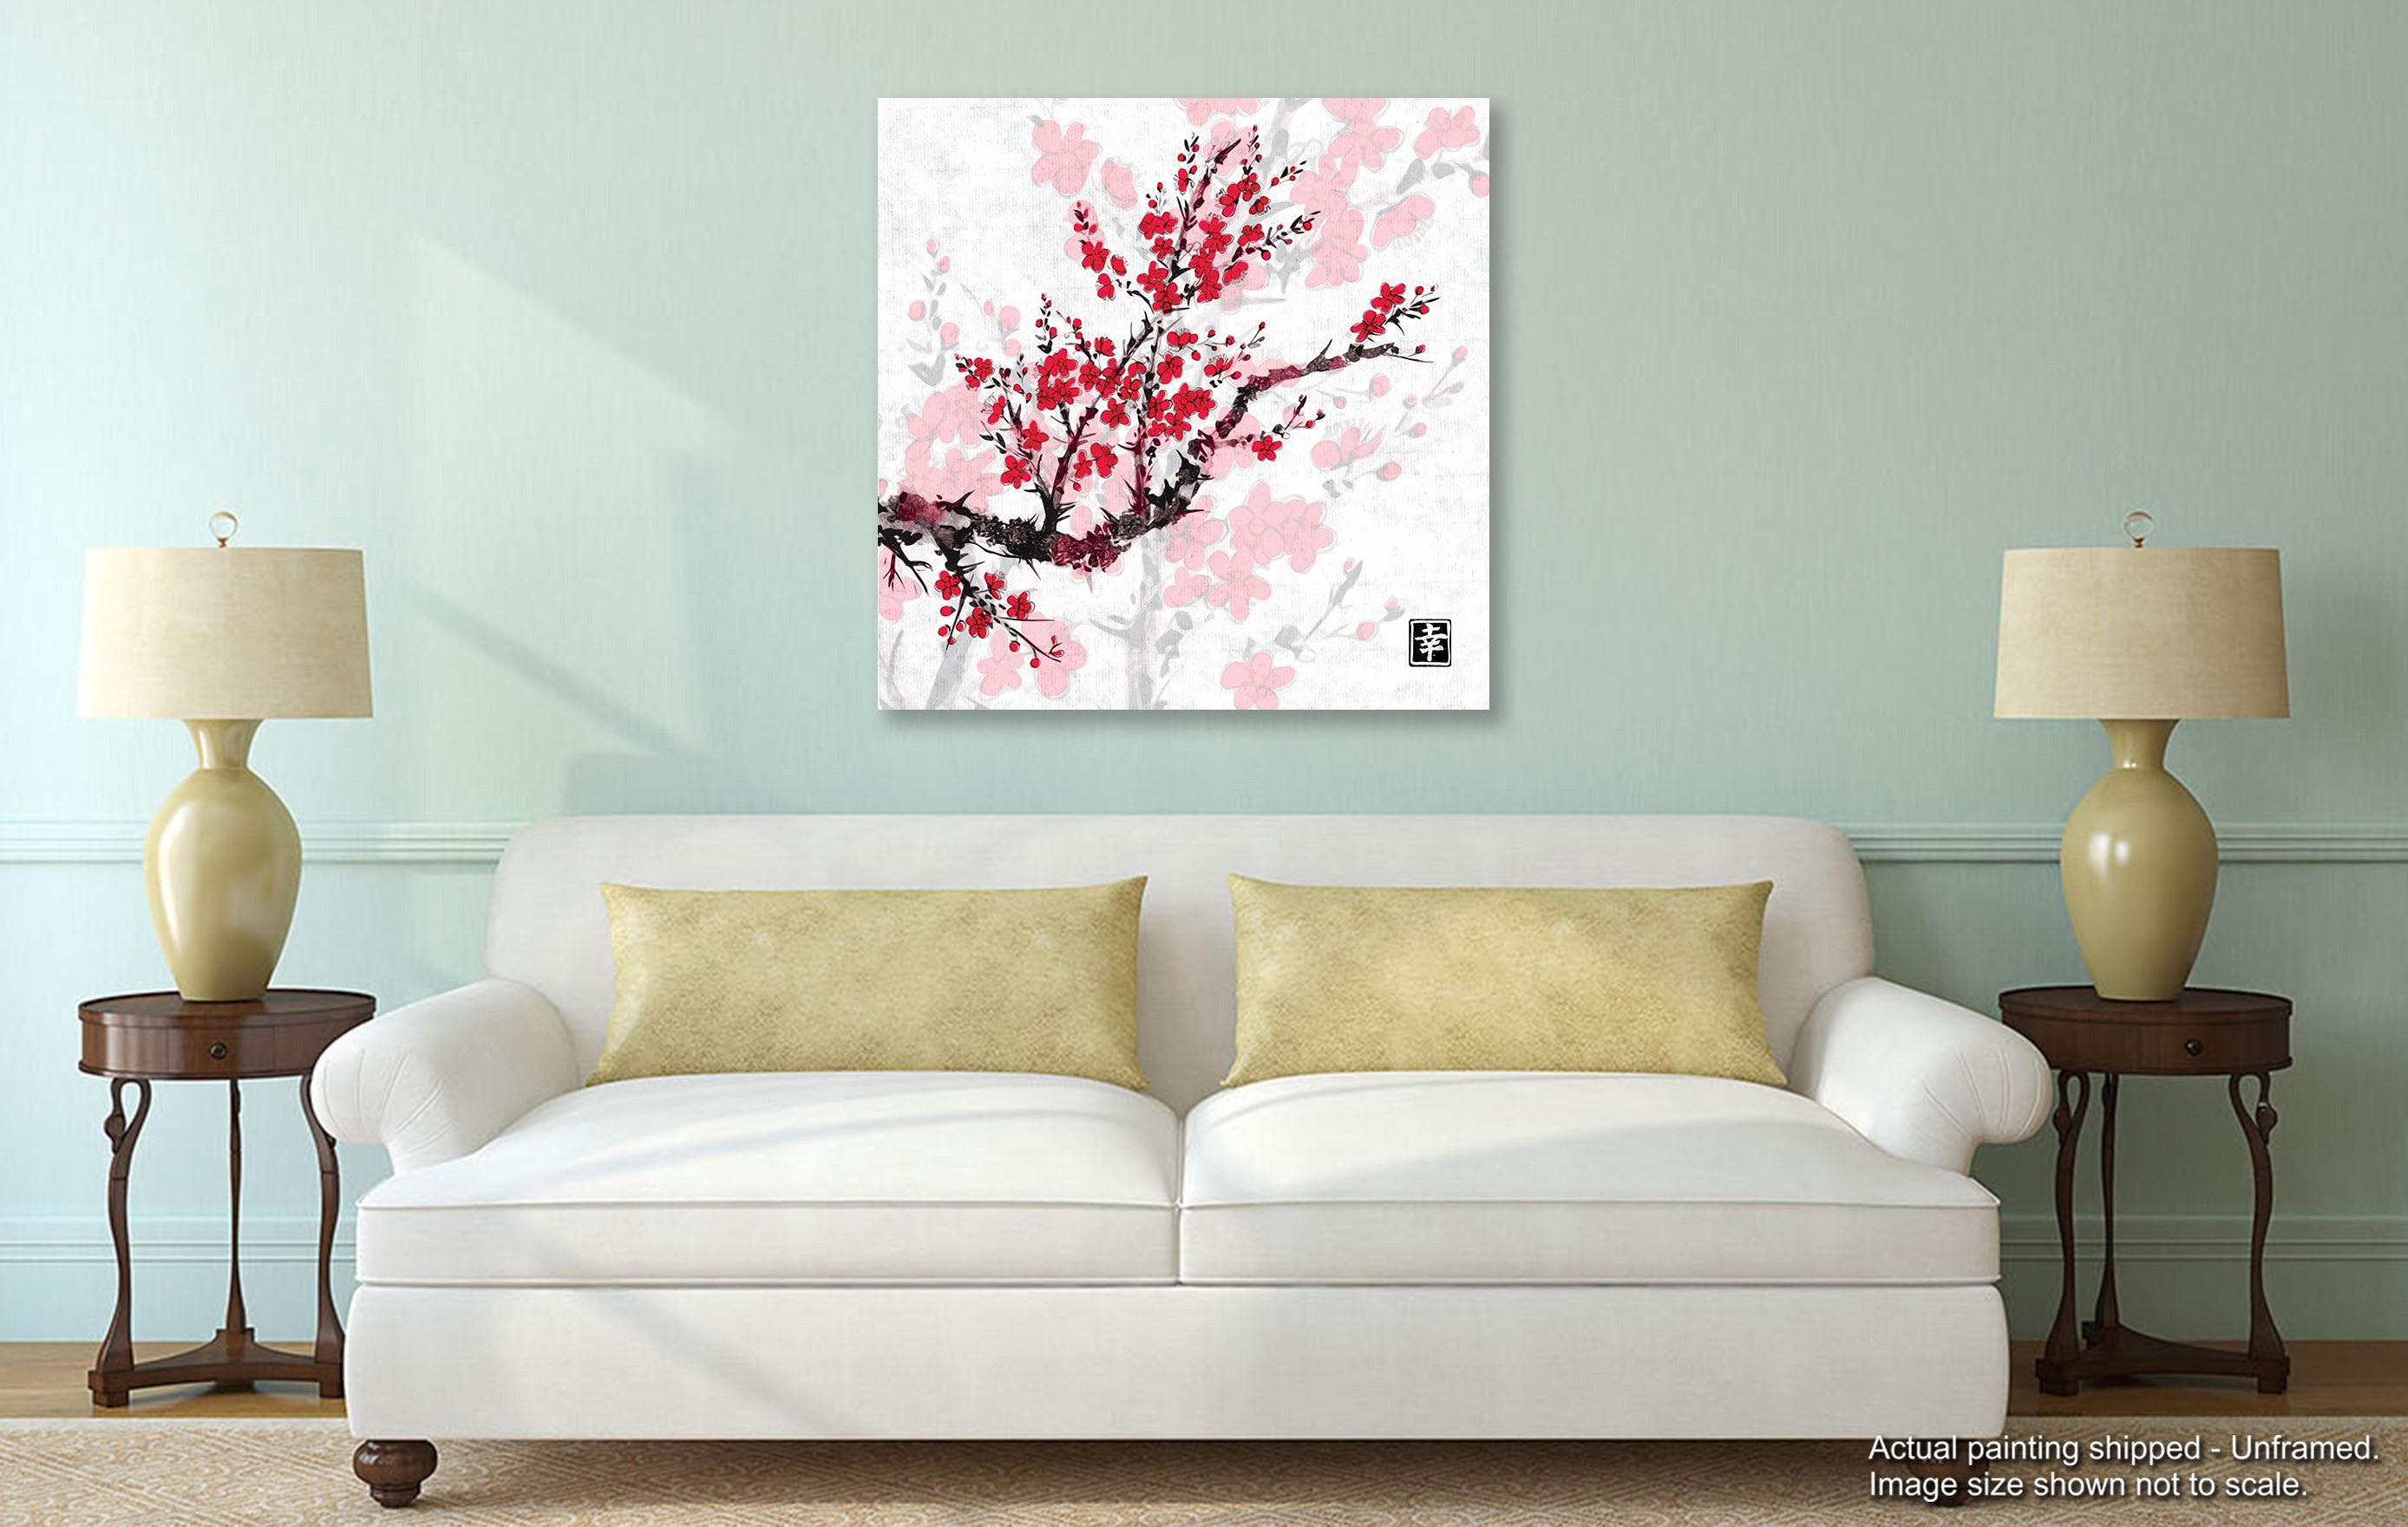 Drawn Cherry Blossom